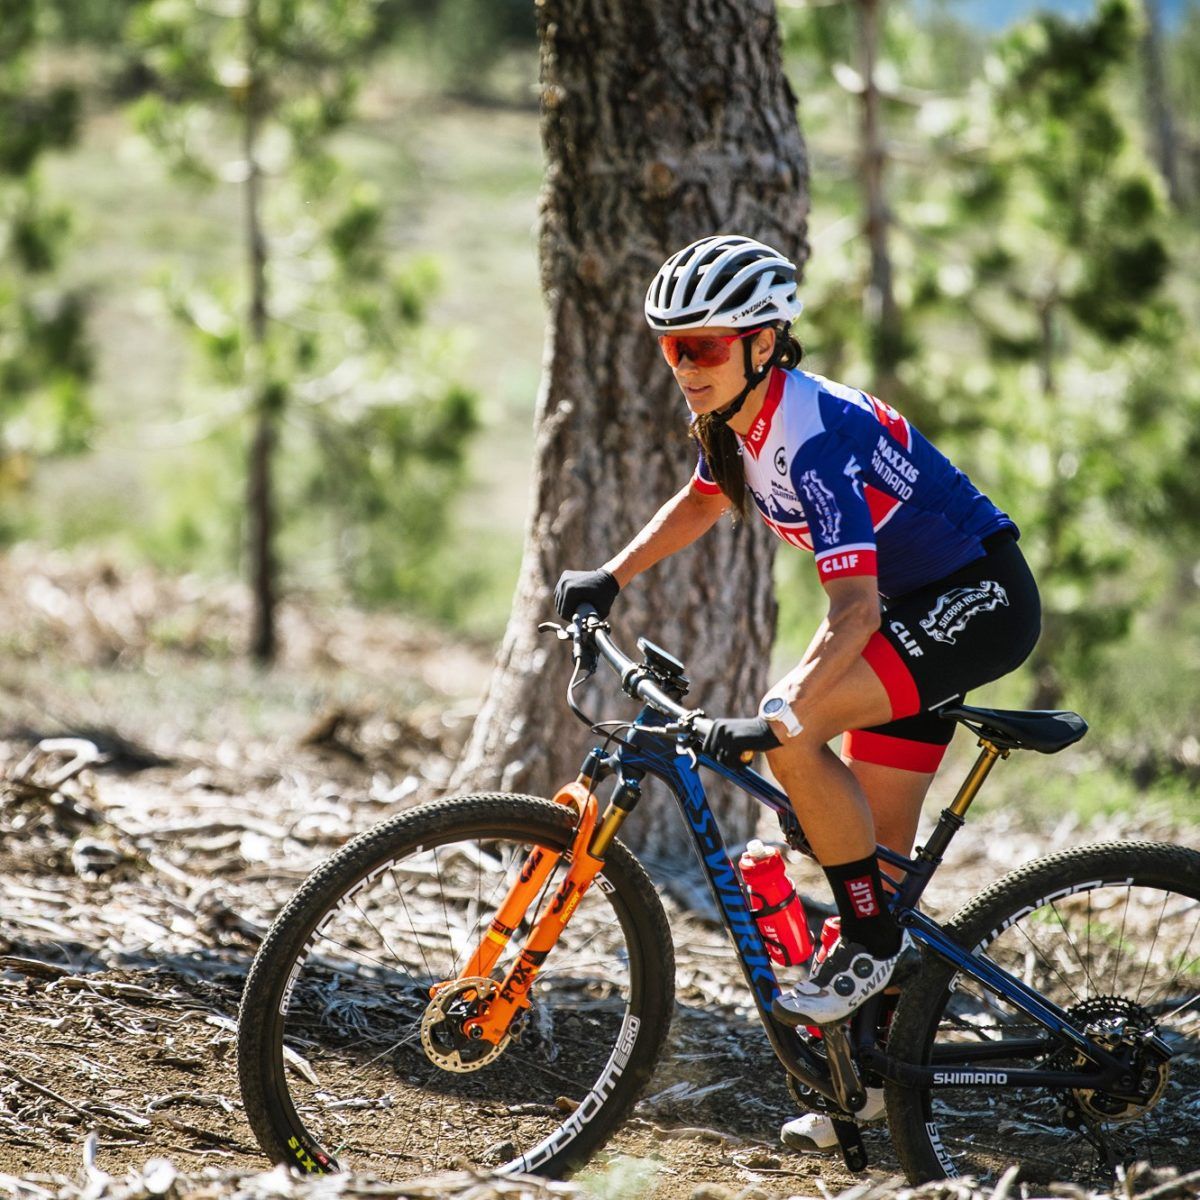 All Kids Bike ambassador Katerina Nash rides a mountain bike on a forested trail